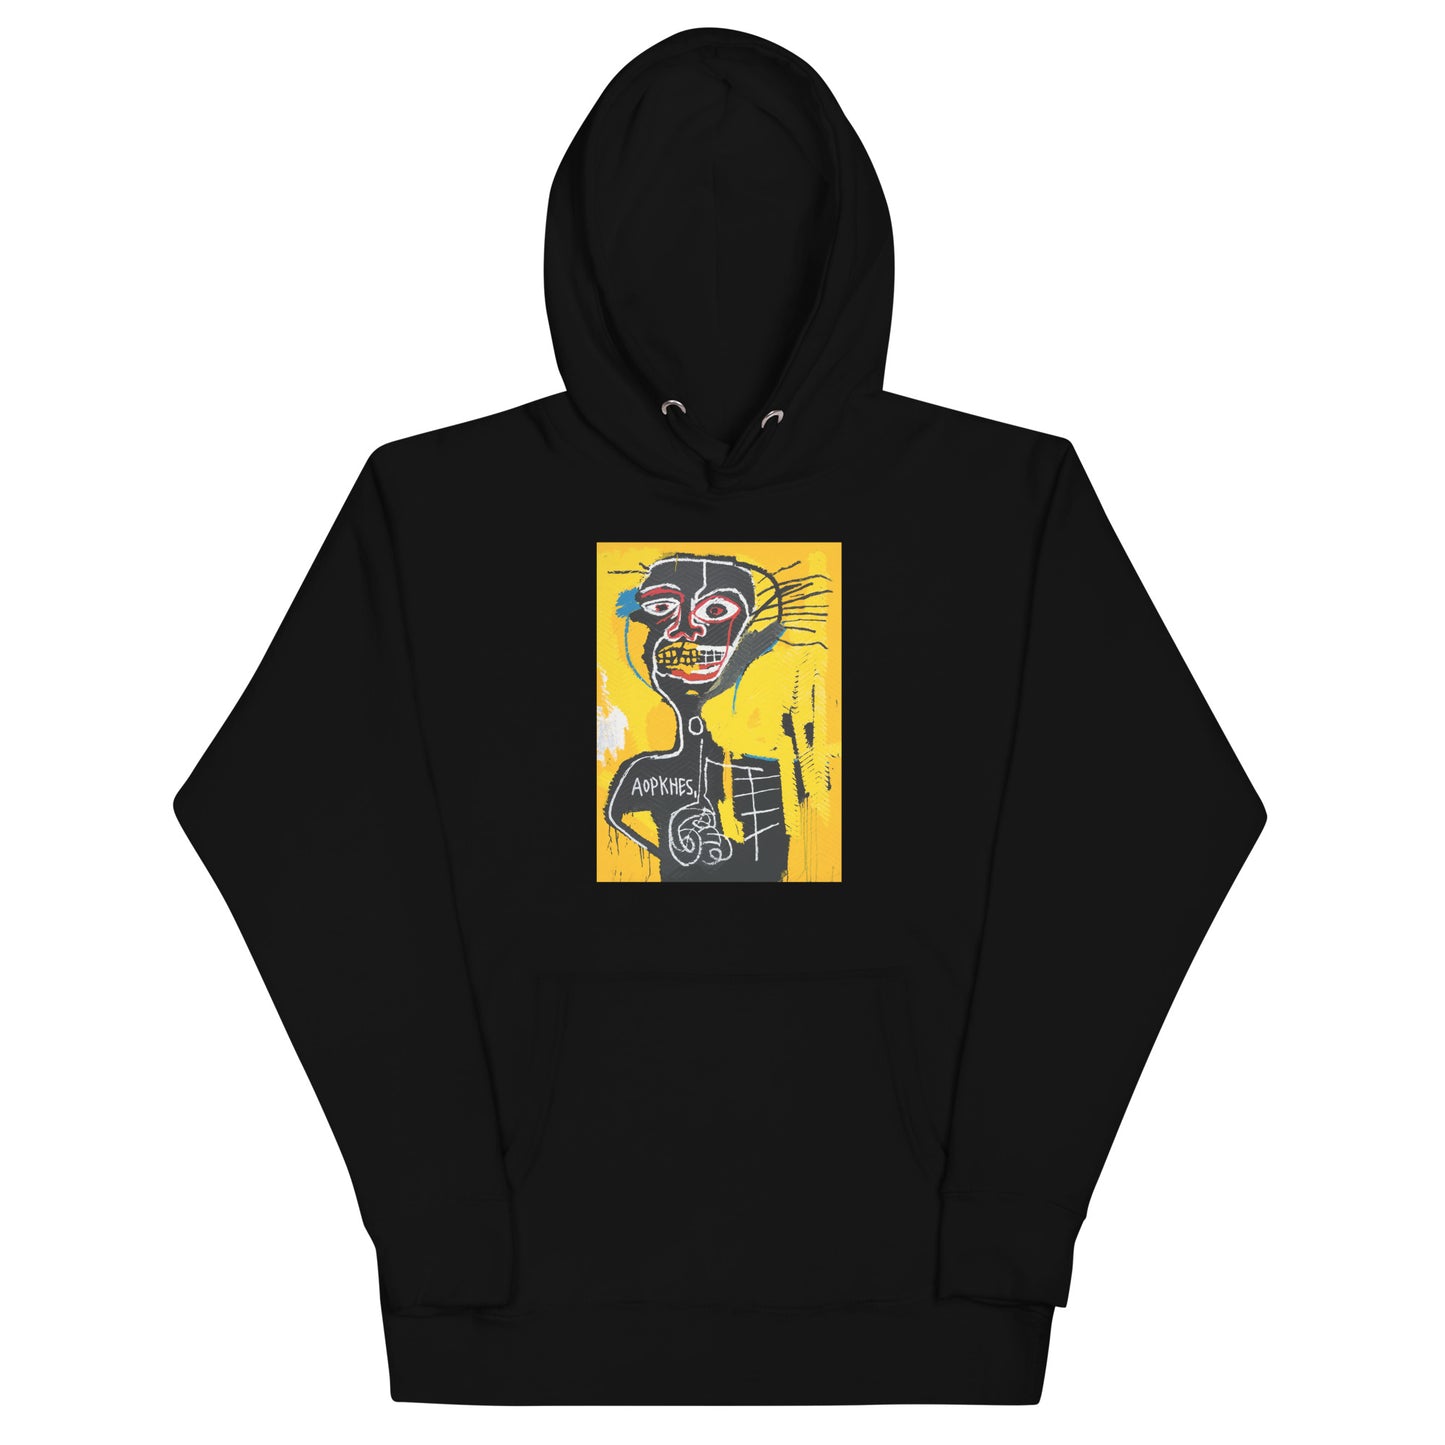 Jean-Michel Basquiat "Cabeza" Artwork Printed Premium Streetwear Sweatshirt Hoodie Black